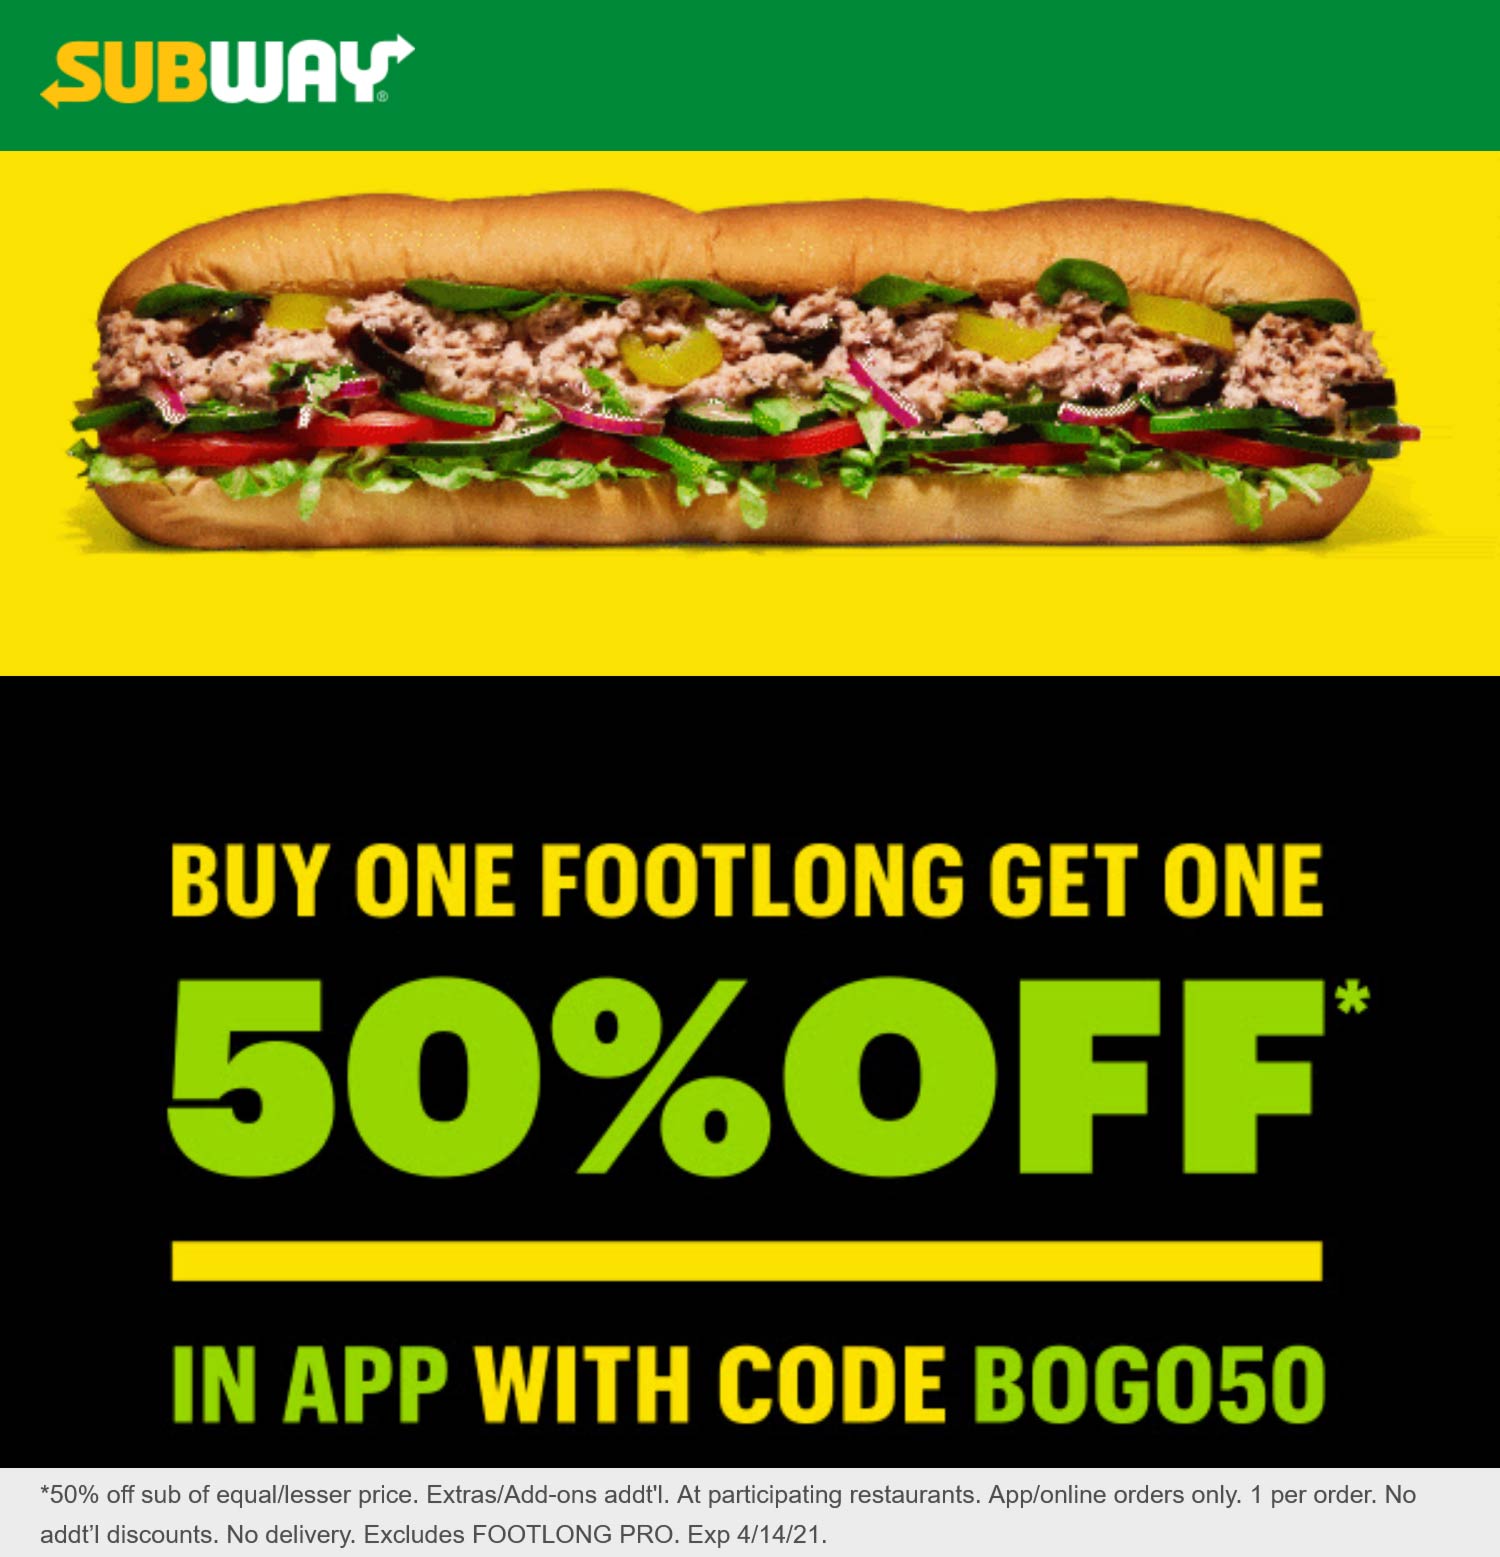 50 off second footlong sandwich at Subway via promo code BOGO50 